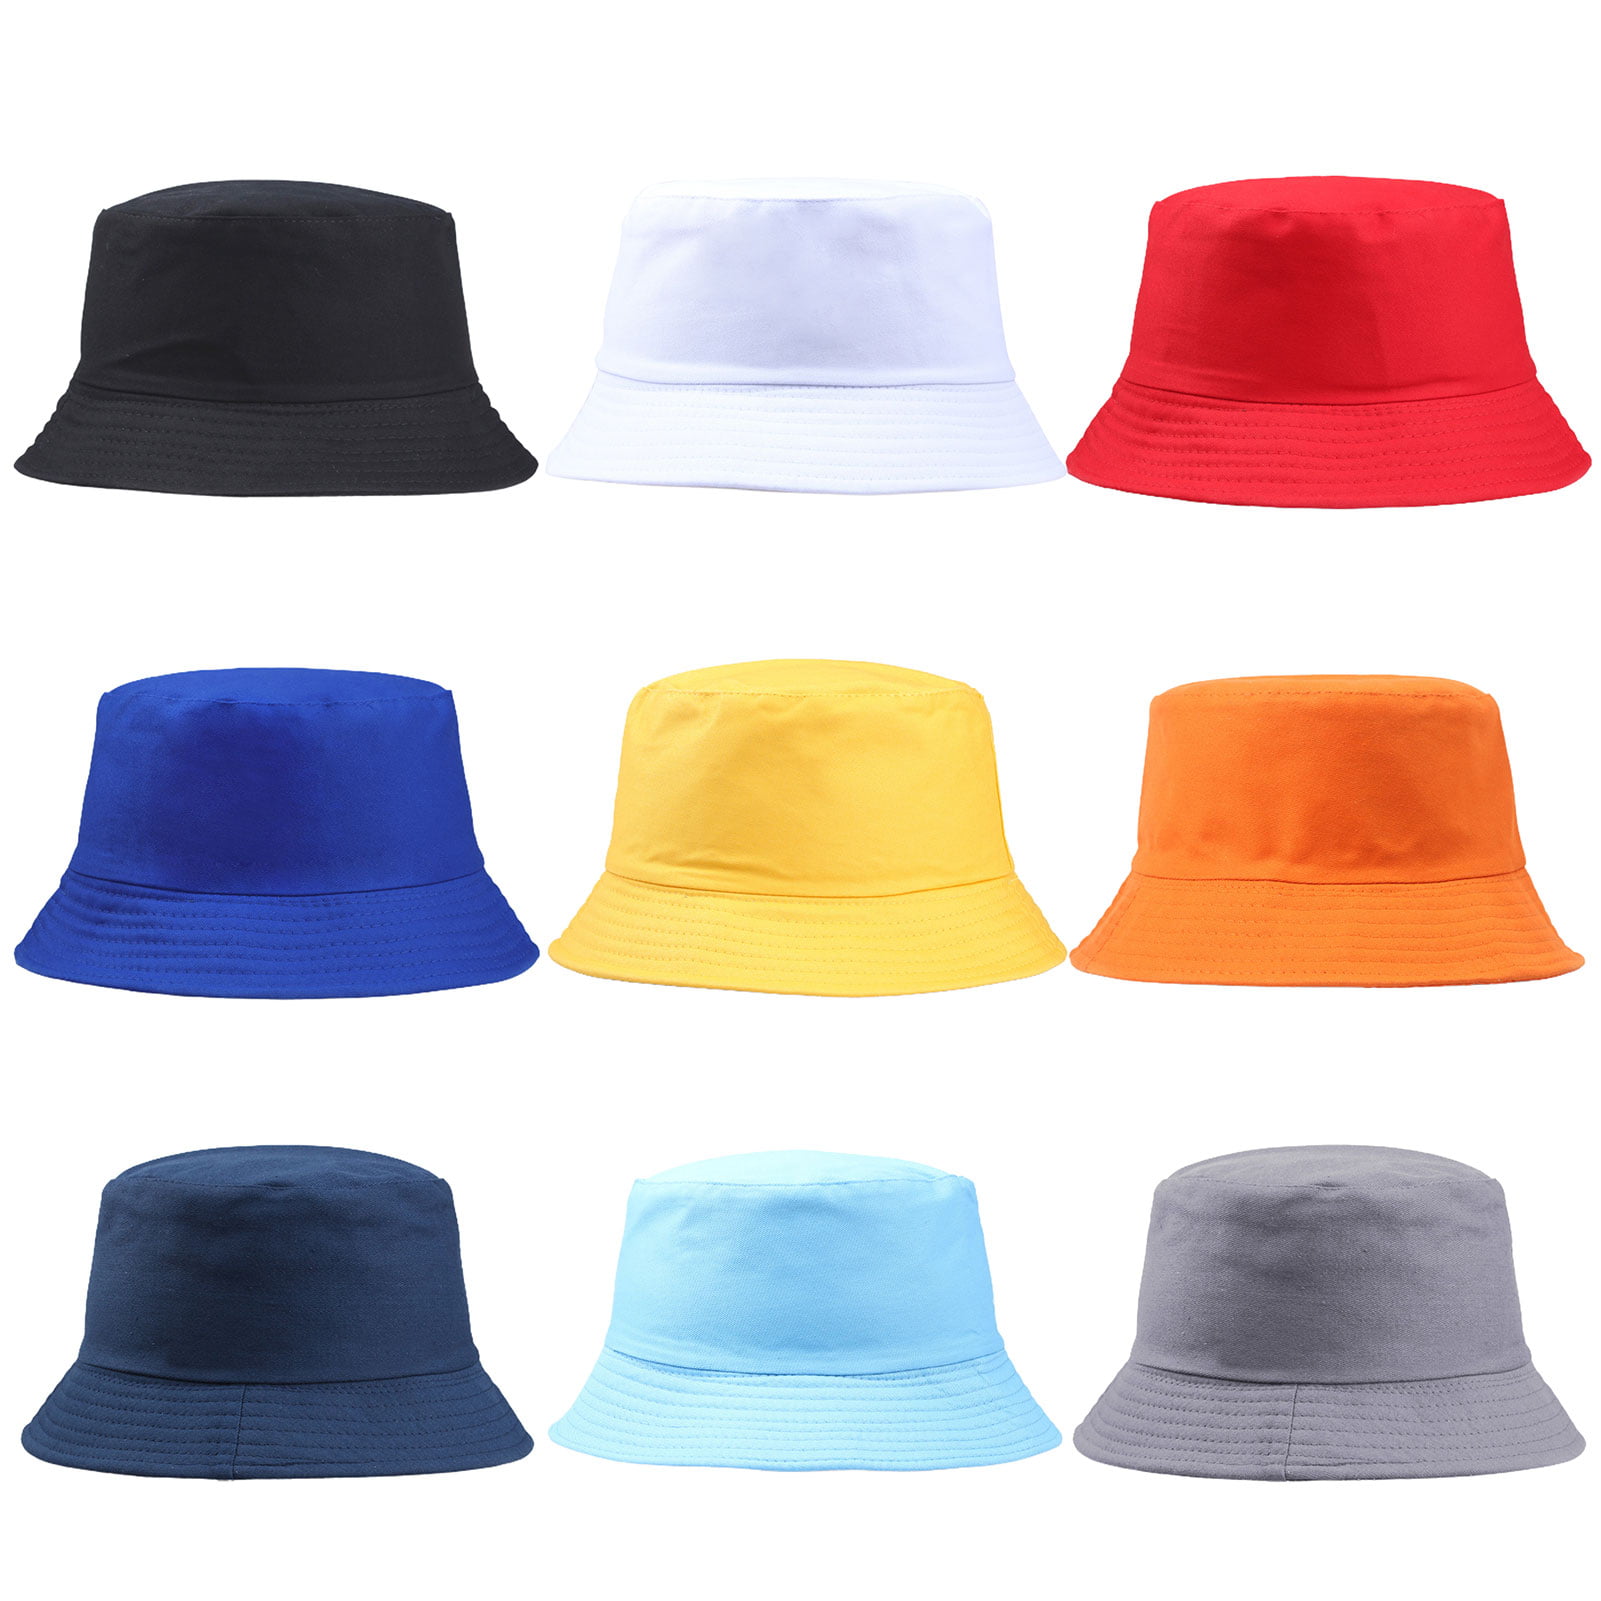 Basin Fisherman Solid Blue,Unisex Hat SANWOOD Cotton Sunshade Color Hop Hip Hat Bucket Cap Navy Outdoor Beach